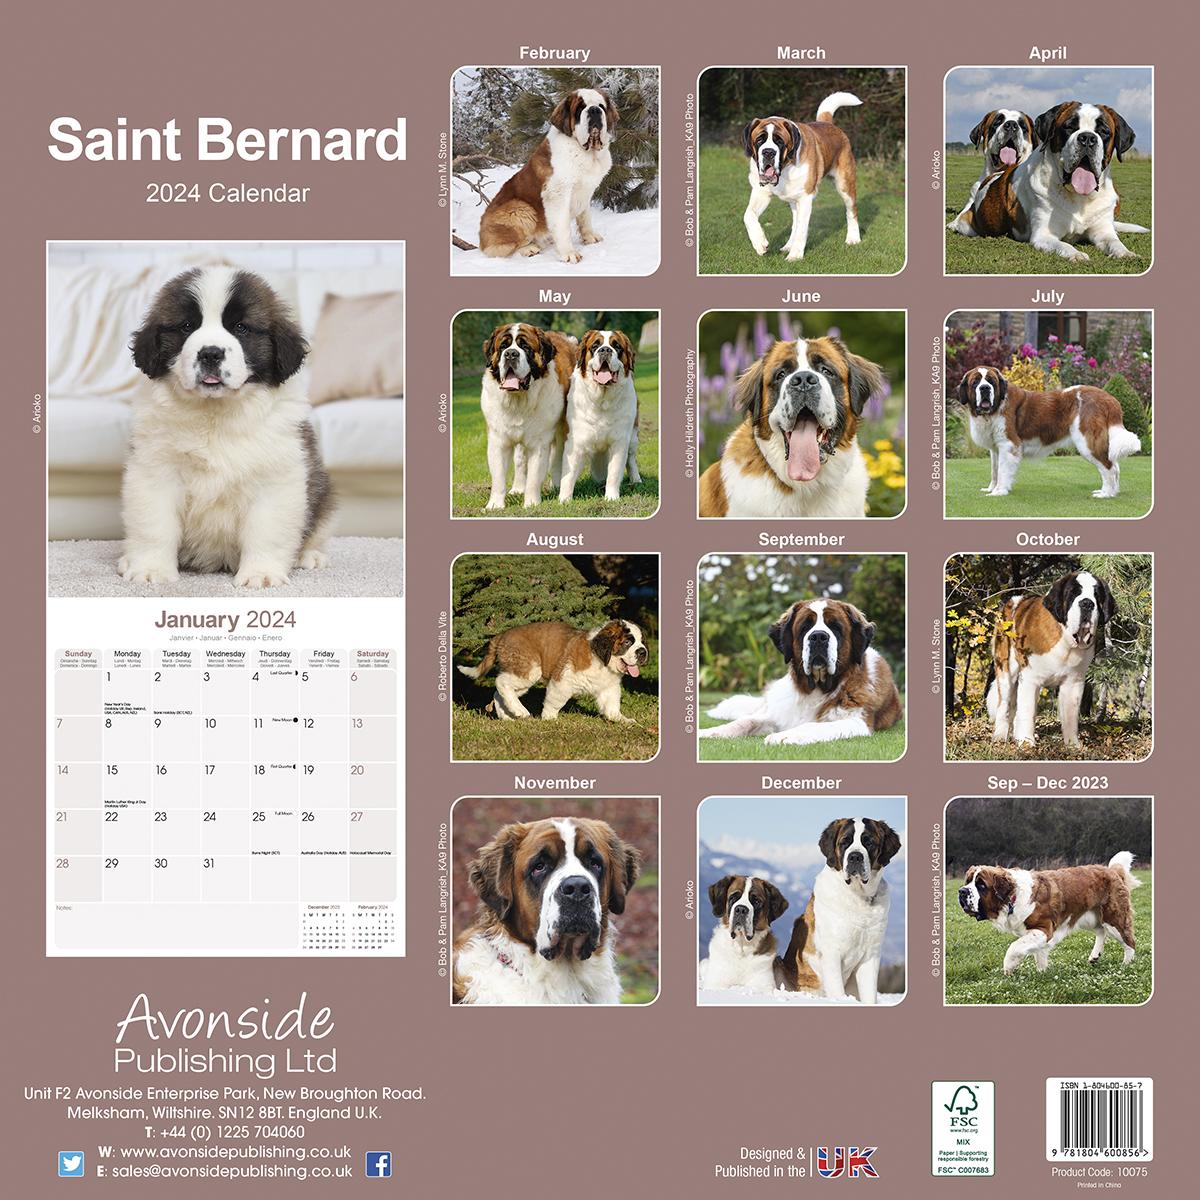 Saint Bernard 2024 Calendar Avonside